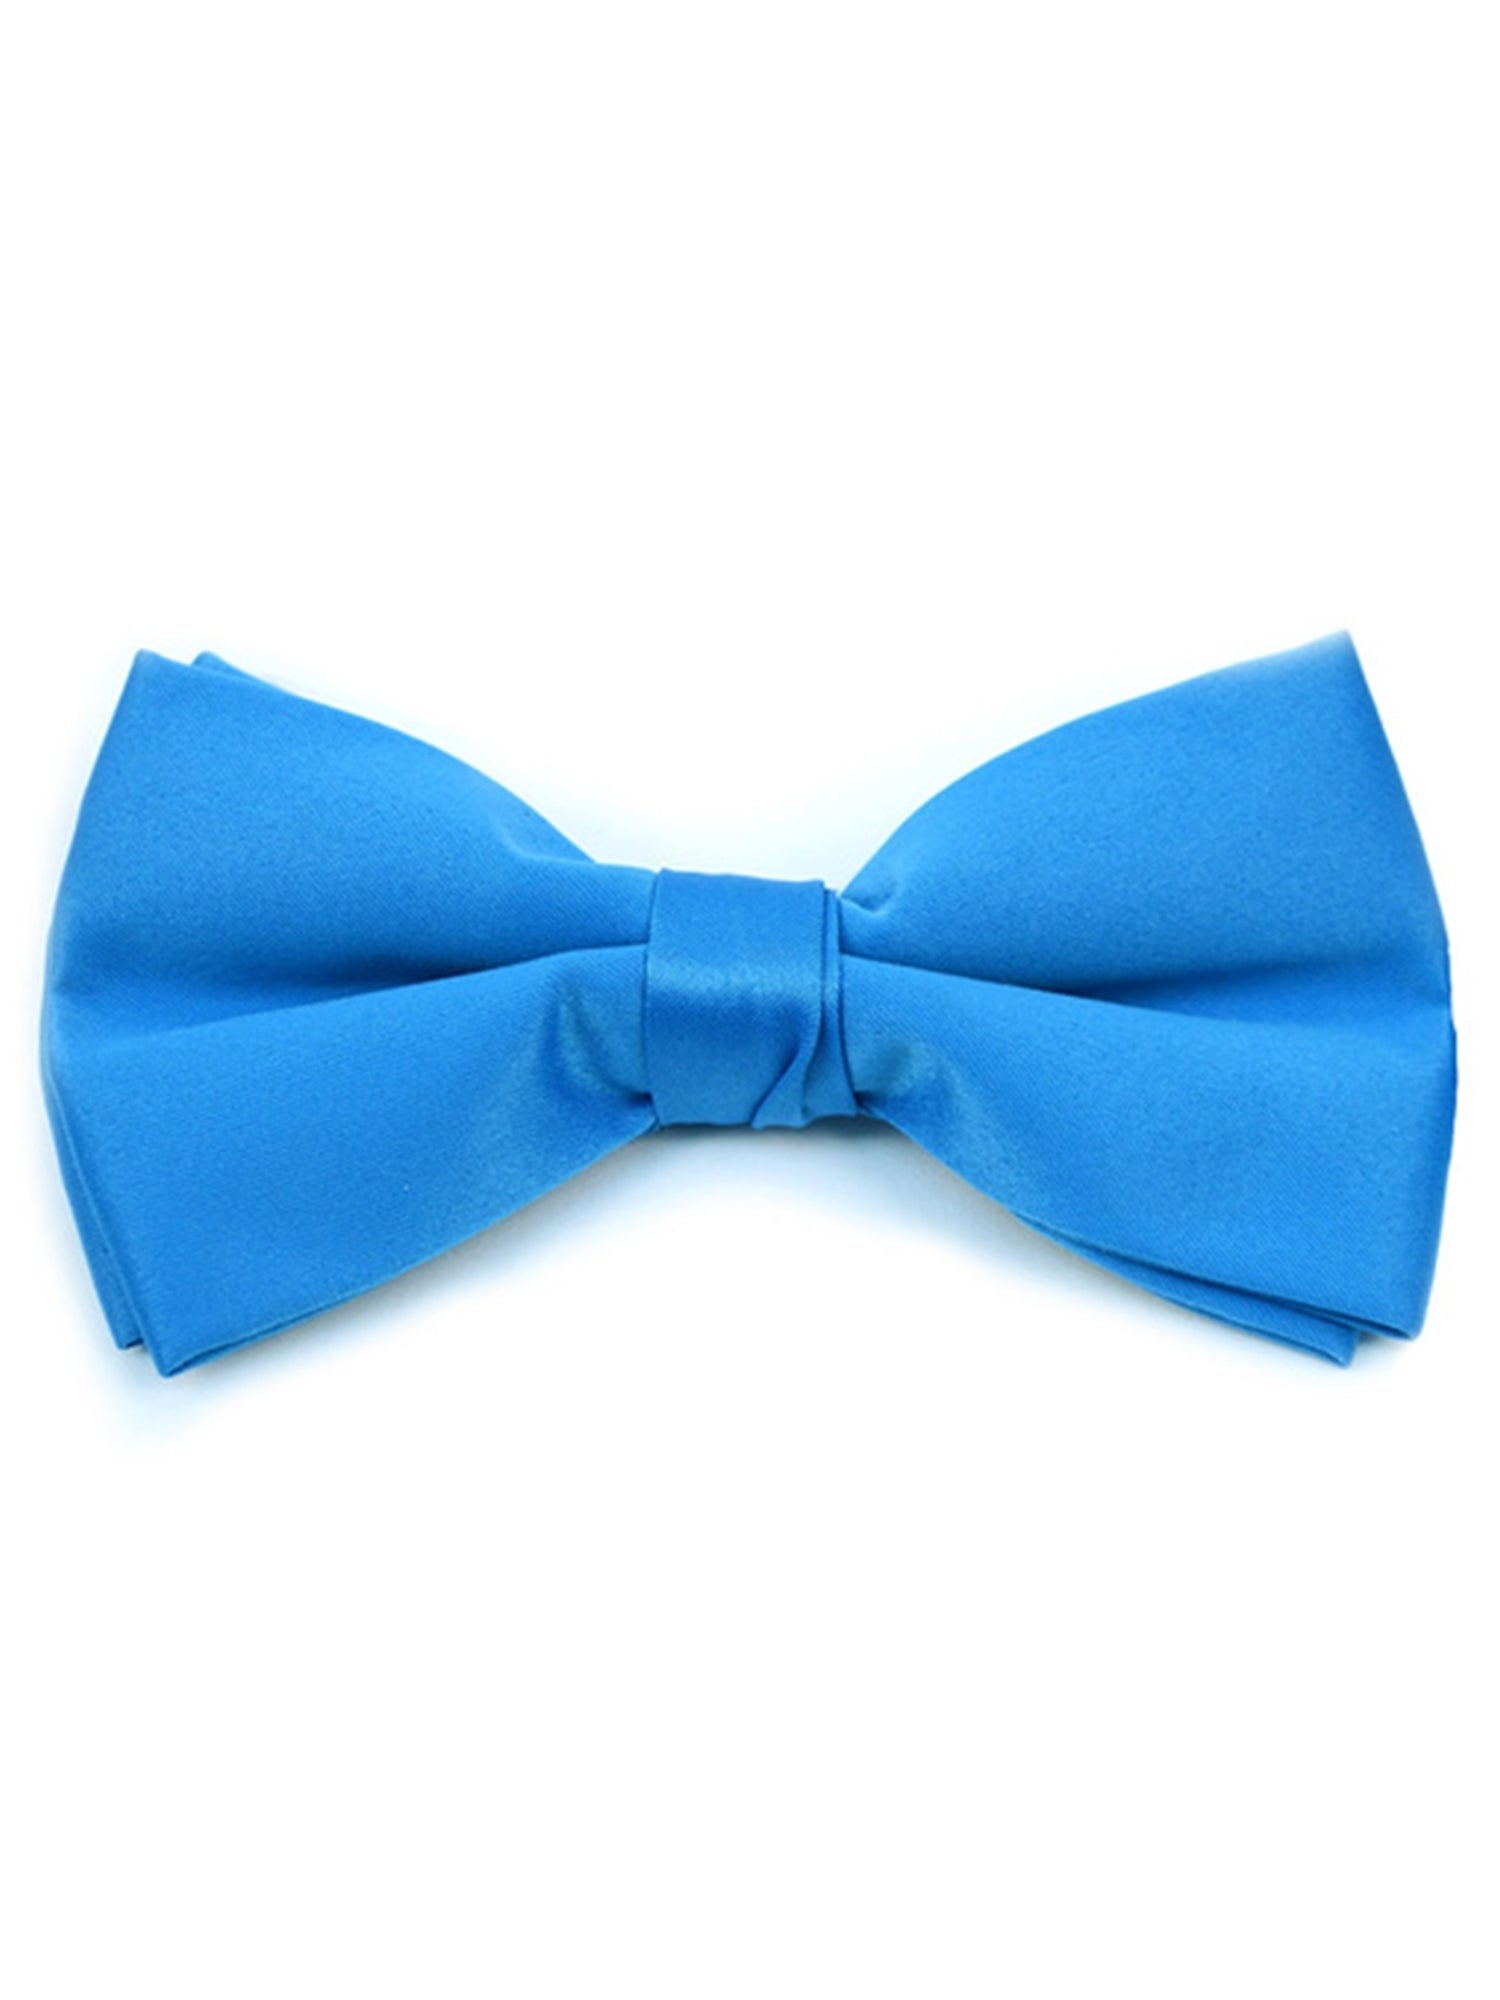 Men's Pre-tied Adjustable Length Bow Tie - Formal Tuxedo Solid Color Men's Solid Color Bow Tie TheDapperTie Cobalt One Size 